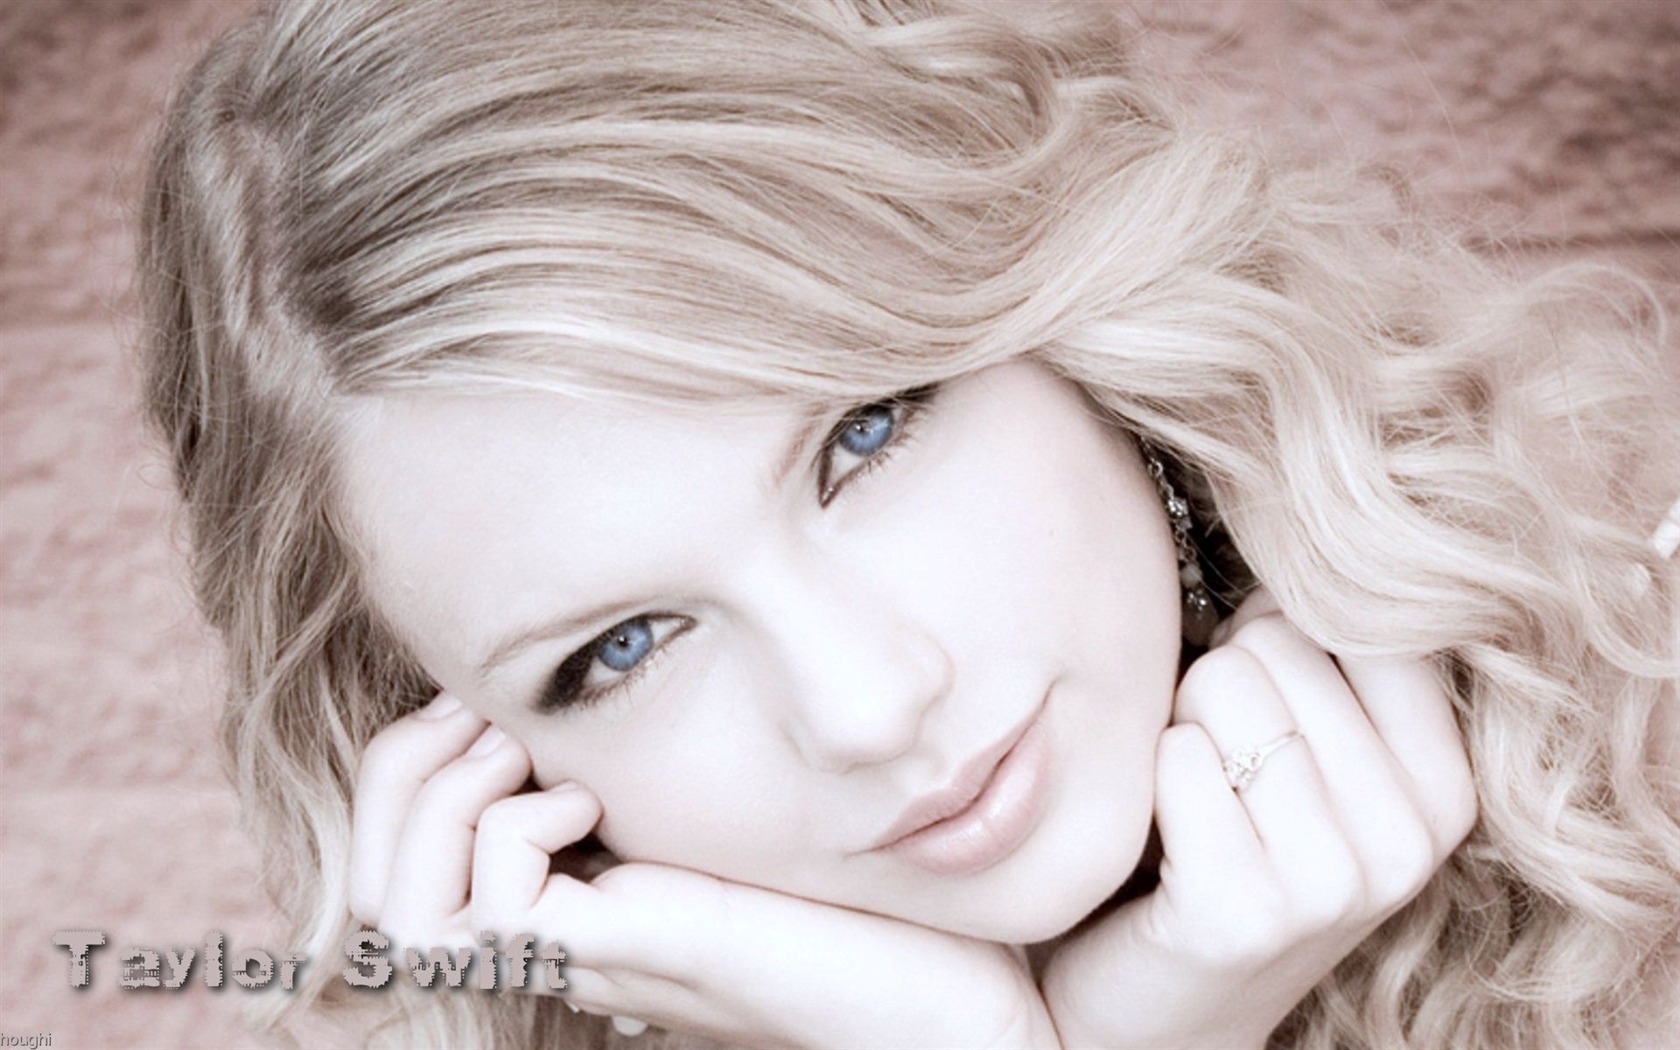 Taylor Swift 泰勒·斯威芙特 美女壁纸3 - 1680x1050